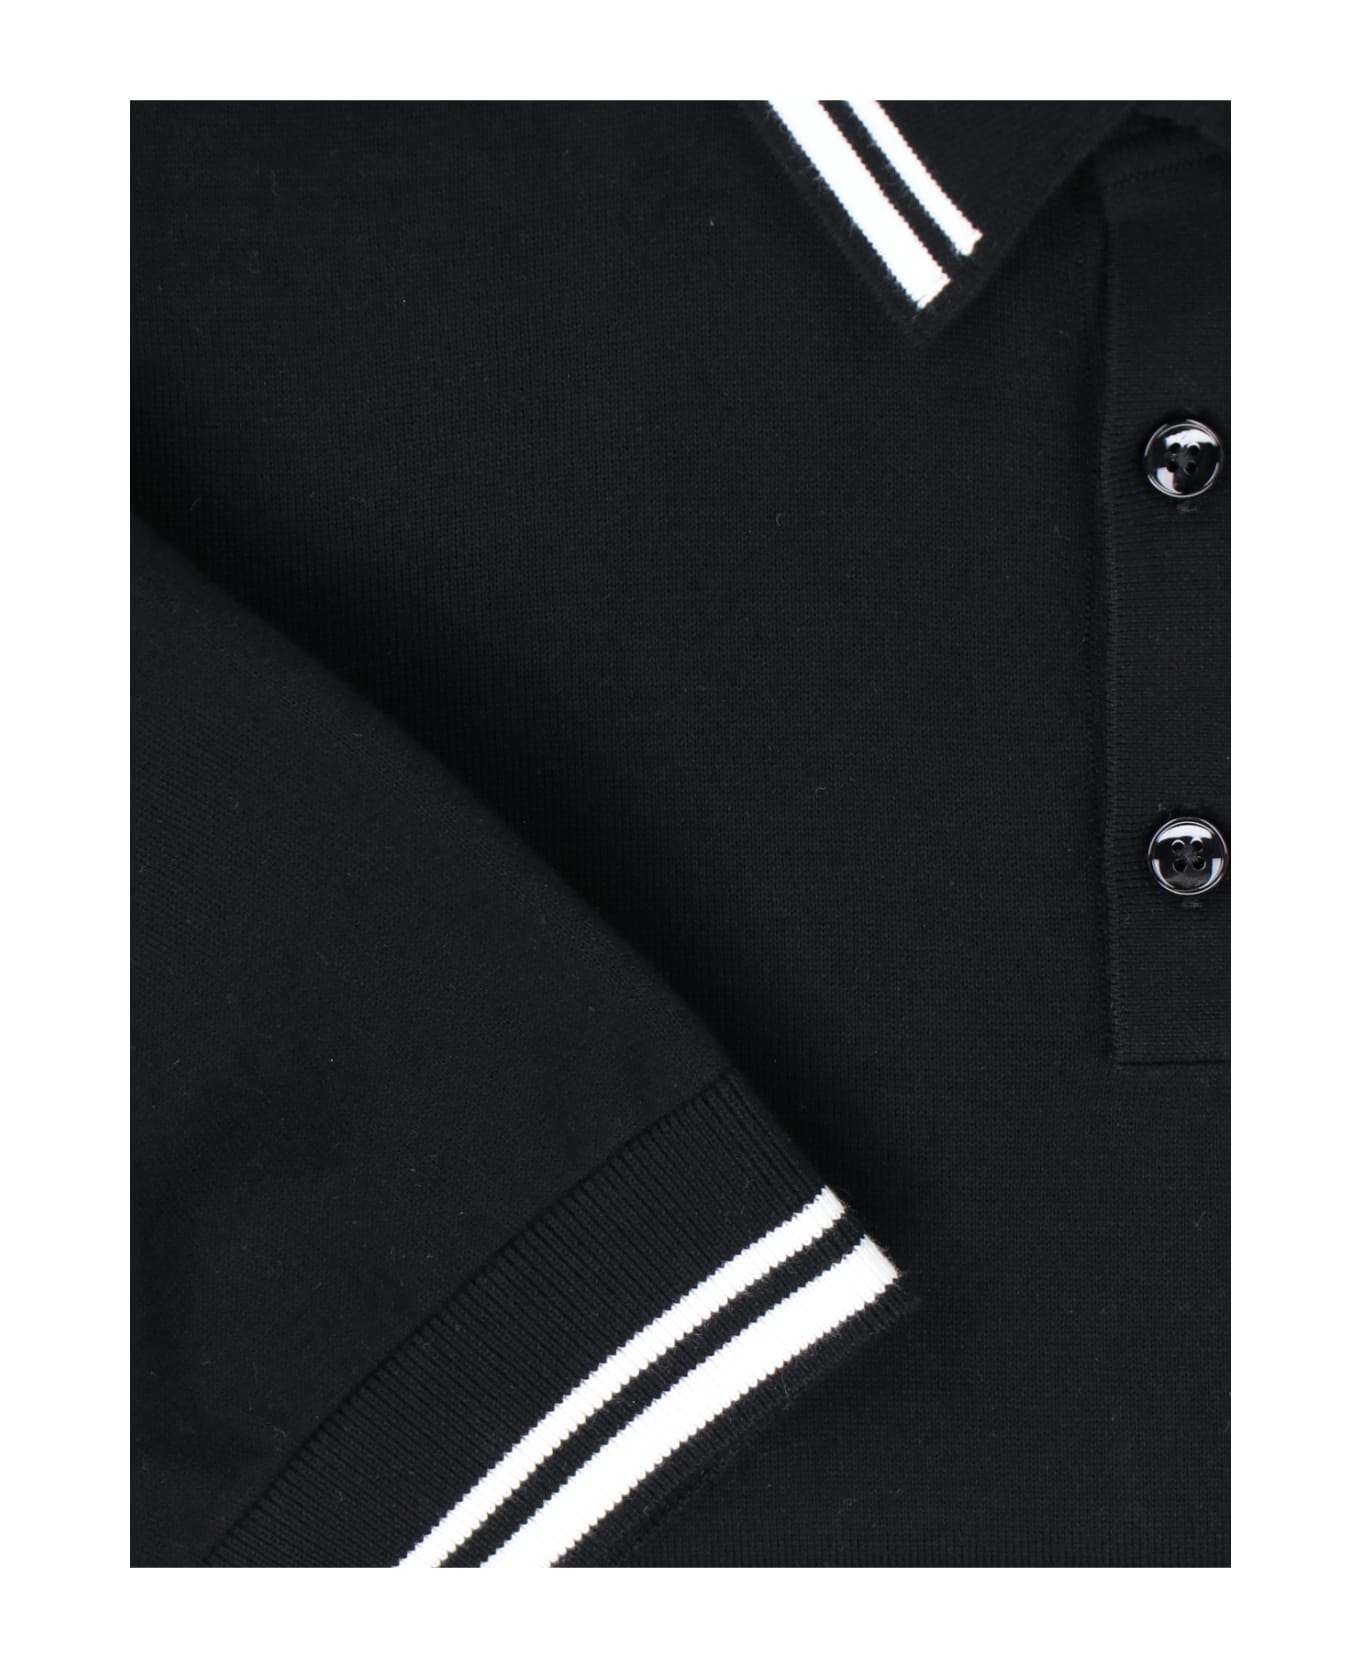 Dolce & Gabbana Slim Fit Polo Shirt - Black